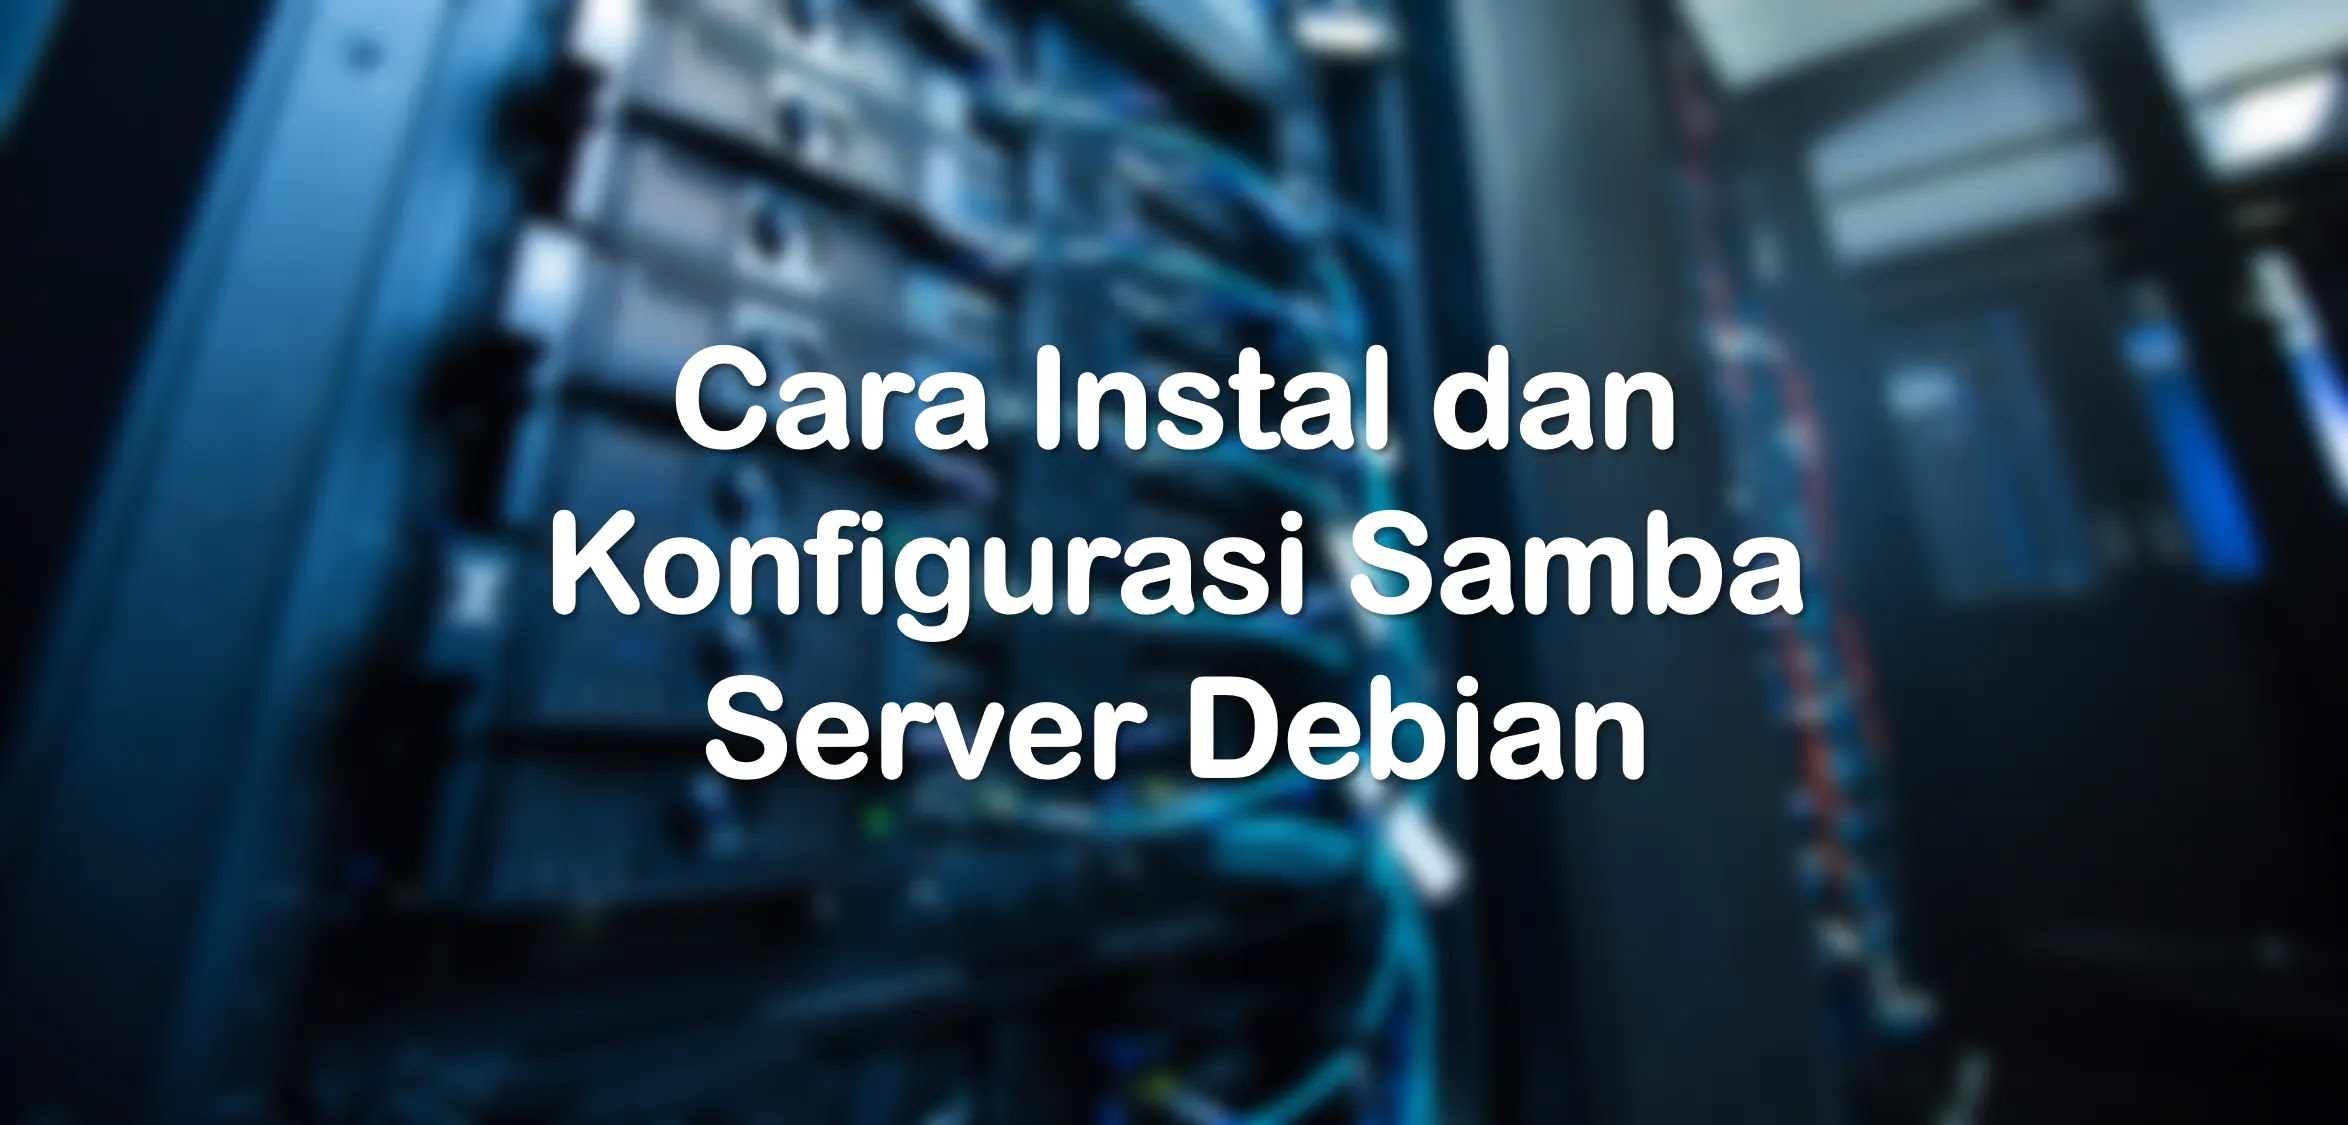 Konfigurasi Samba Server